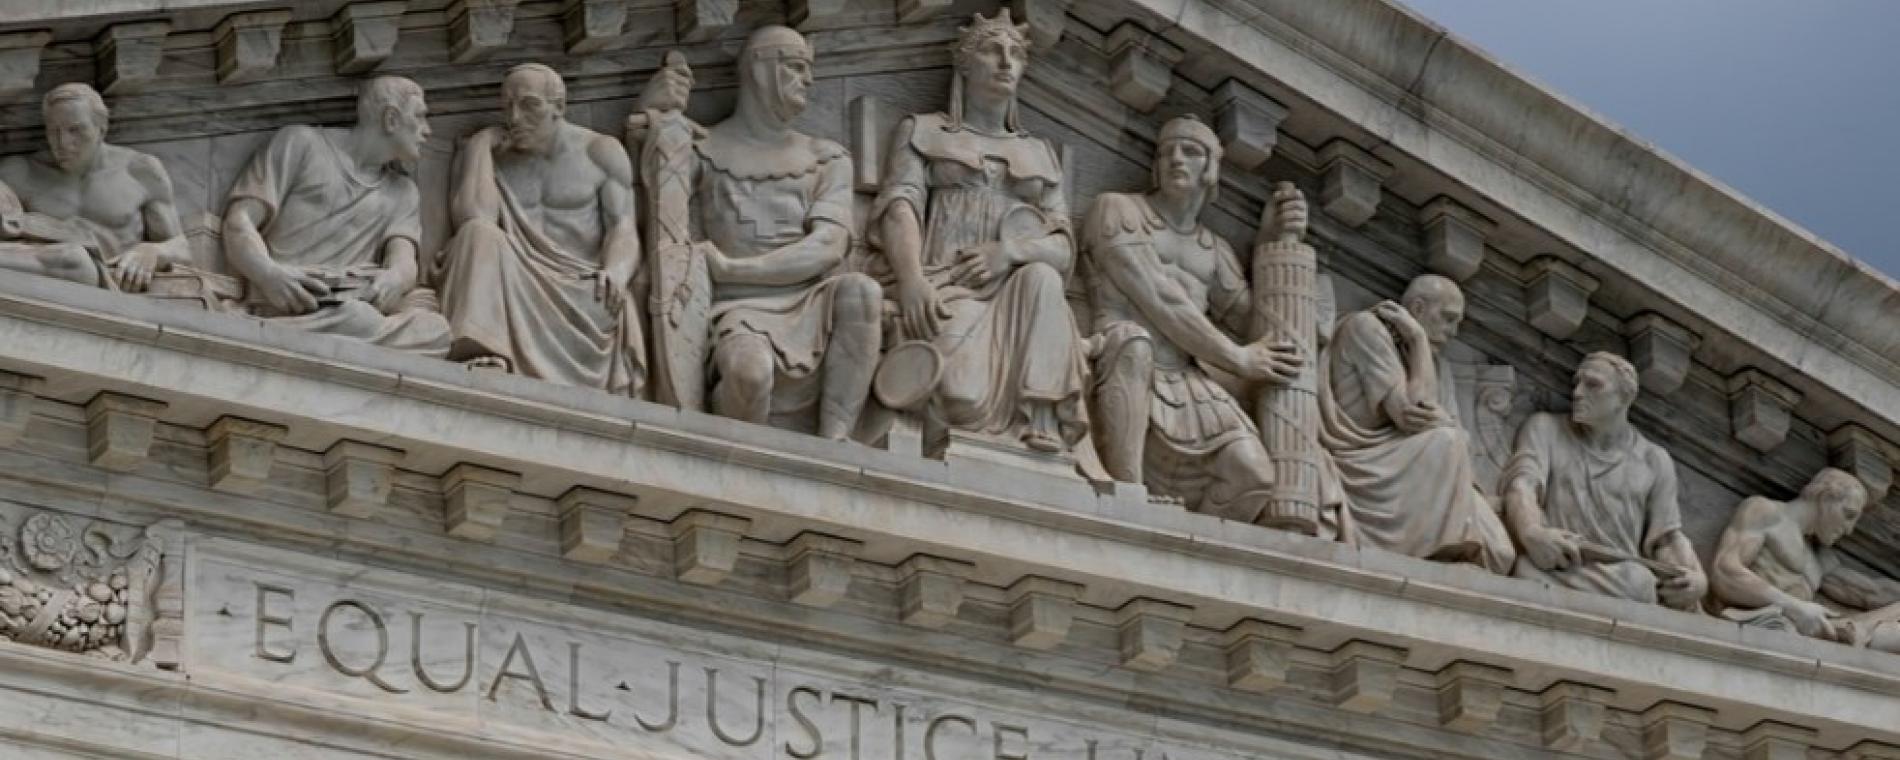 Photo of the pediment of the Supreme Court